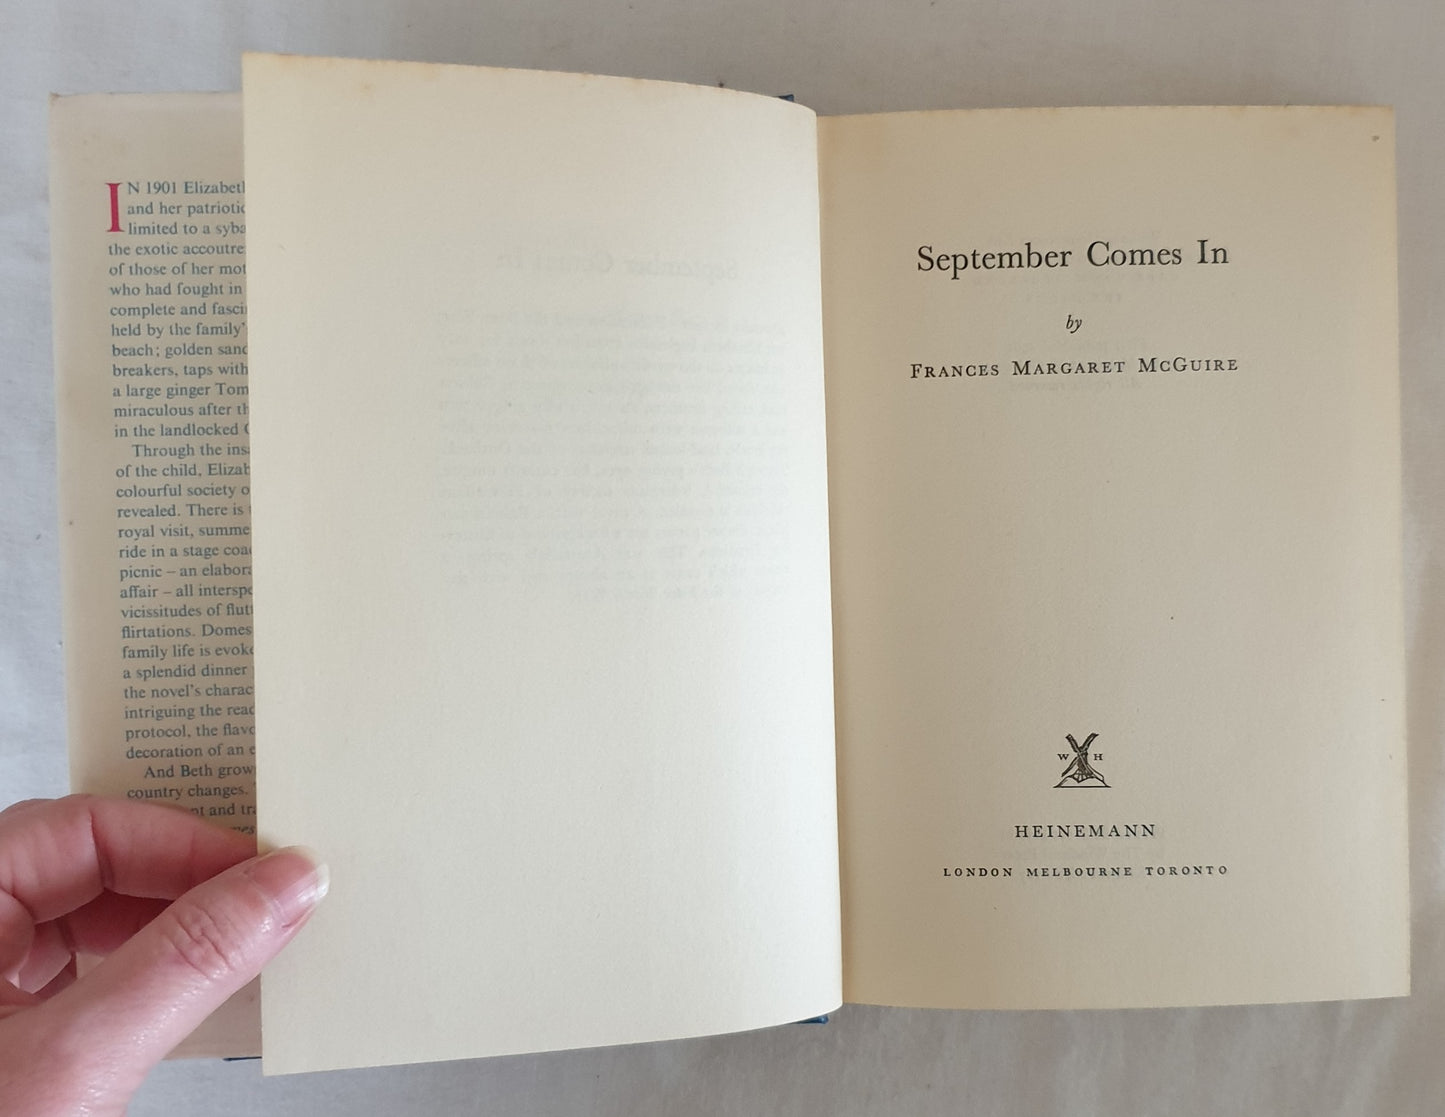 September Comes In by Frances Margaret McGuire